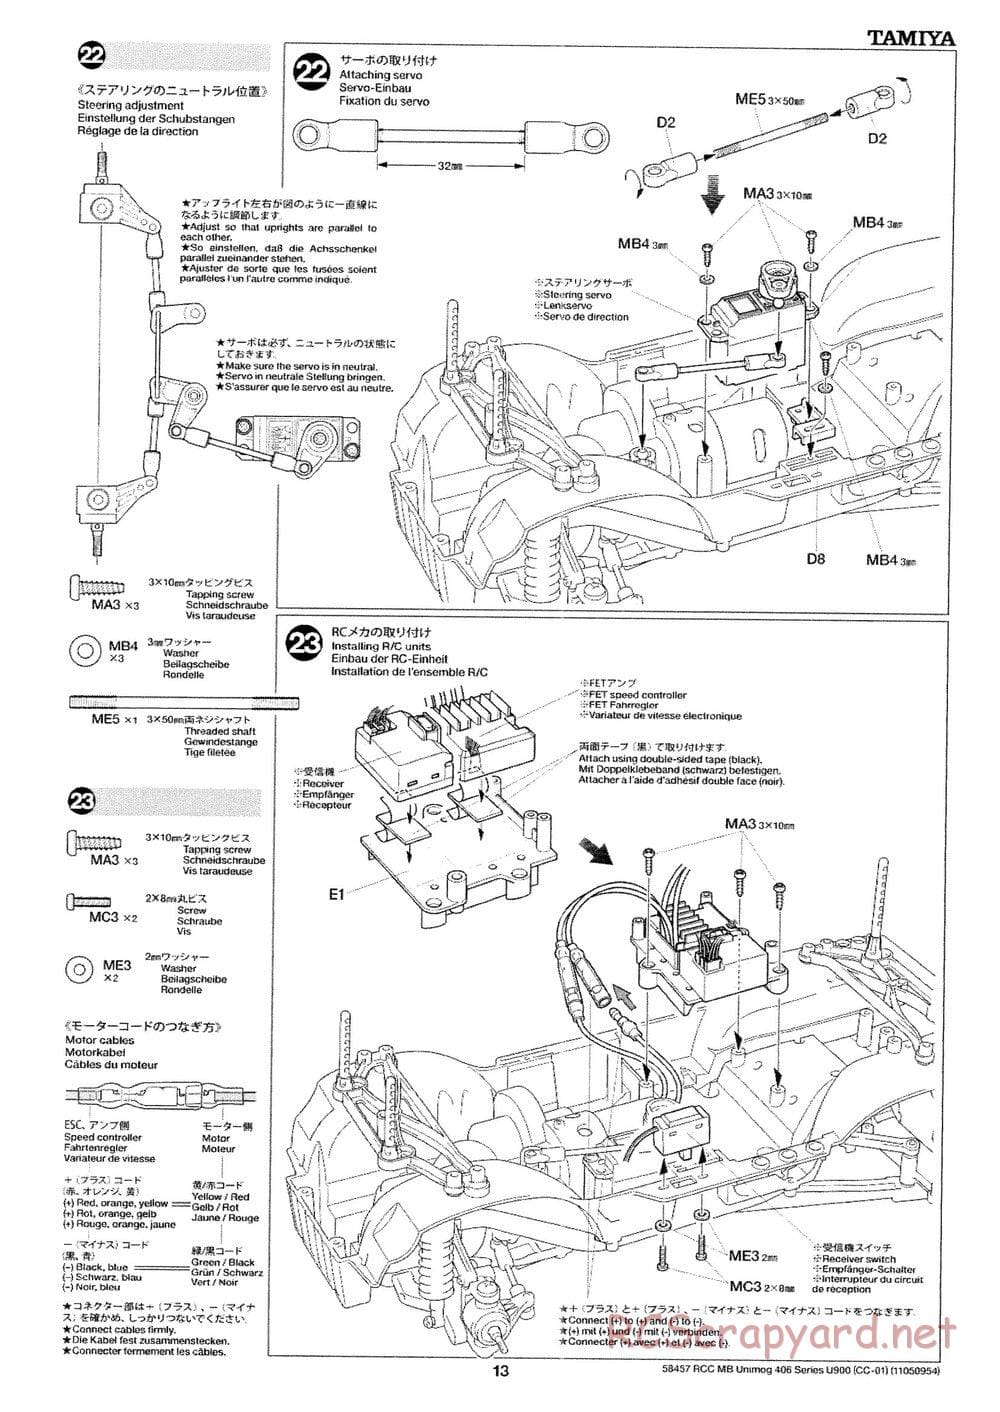 Tamiya - Mercedes-Benz Unimog 406 Series U900 - CC-01 Chassis - Manual - Page 13